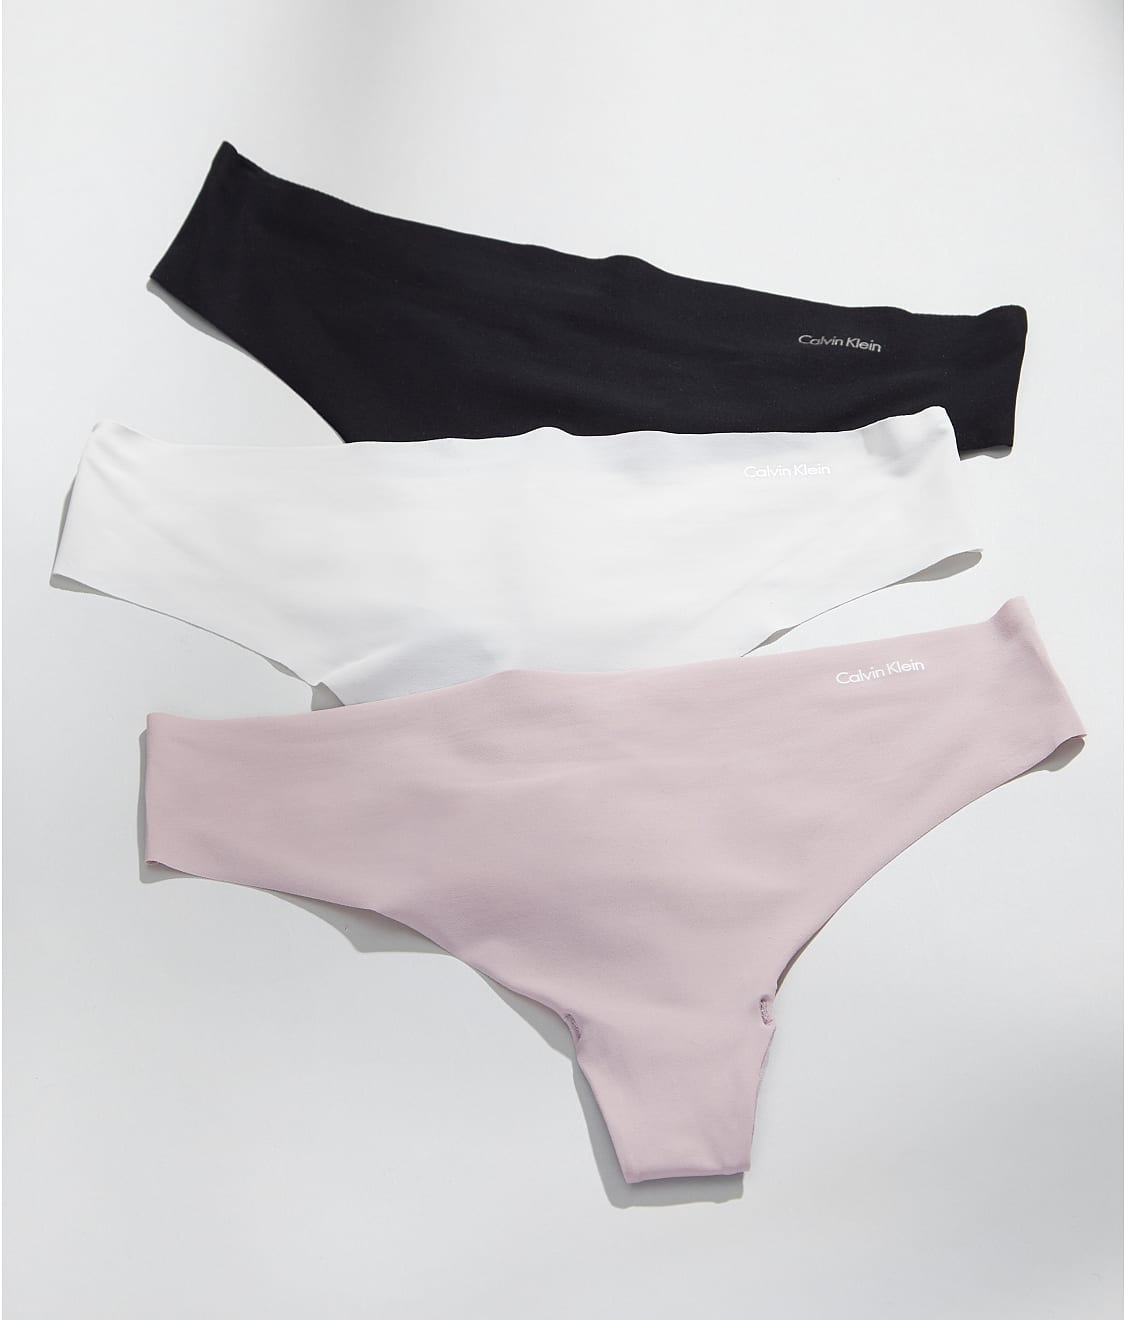 Calvin Klein Women's Invisibles Seamless Thong Panties, Multipack